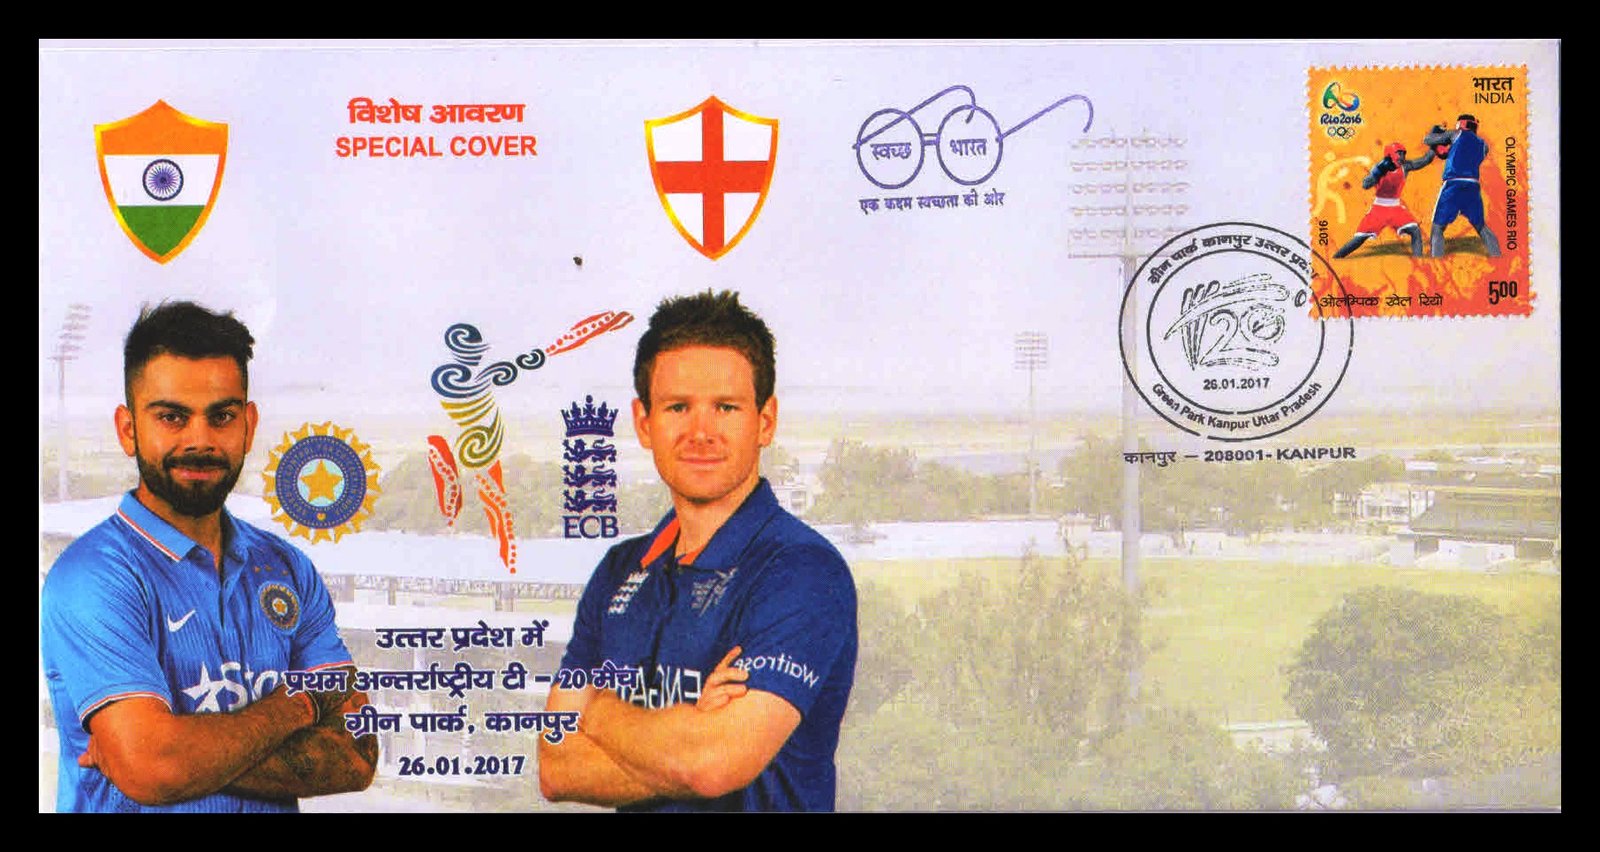 INDIA Special Cover on Cricket-Virat Kohli, 1st T-20 Match in Uttar Pradesh, Green Park, Kanpur dated 26-01-2017